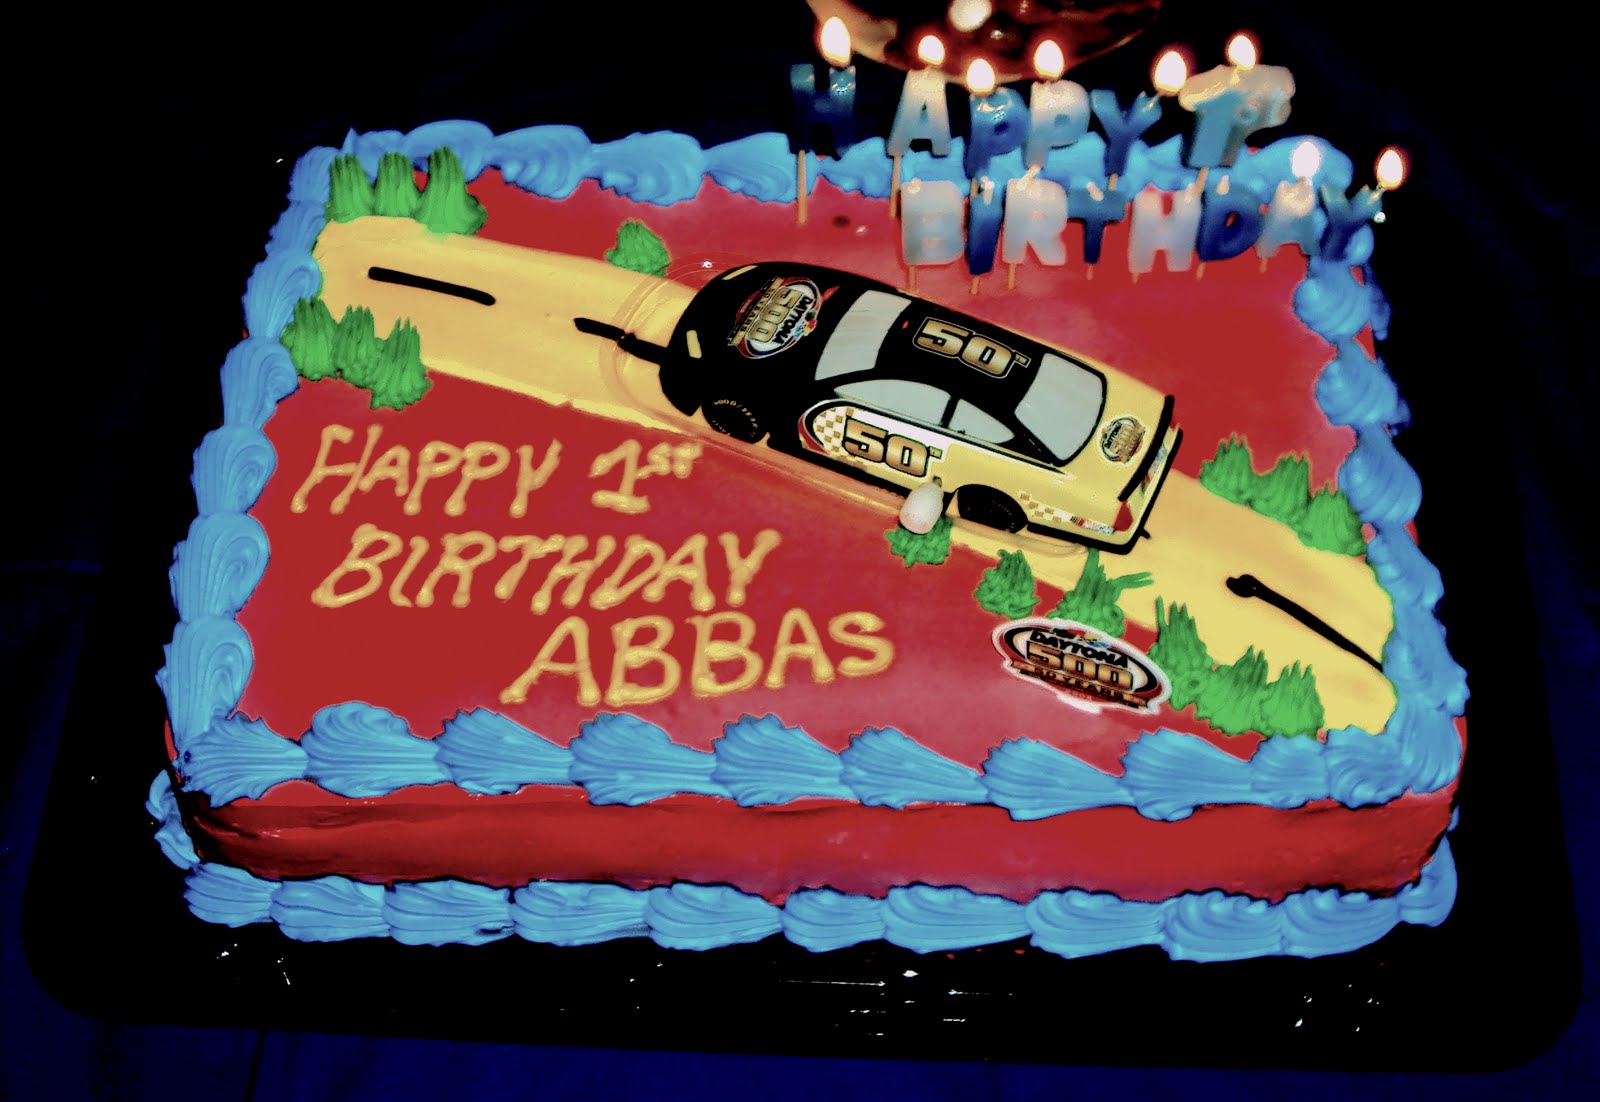 Race Car Cake 1st Birthday Images.